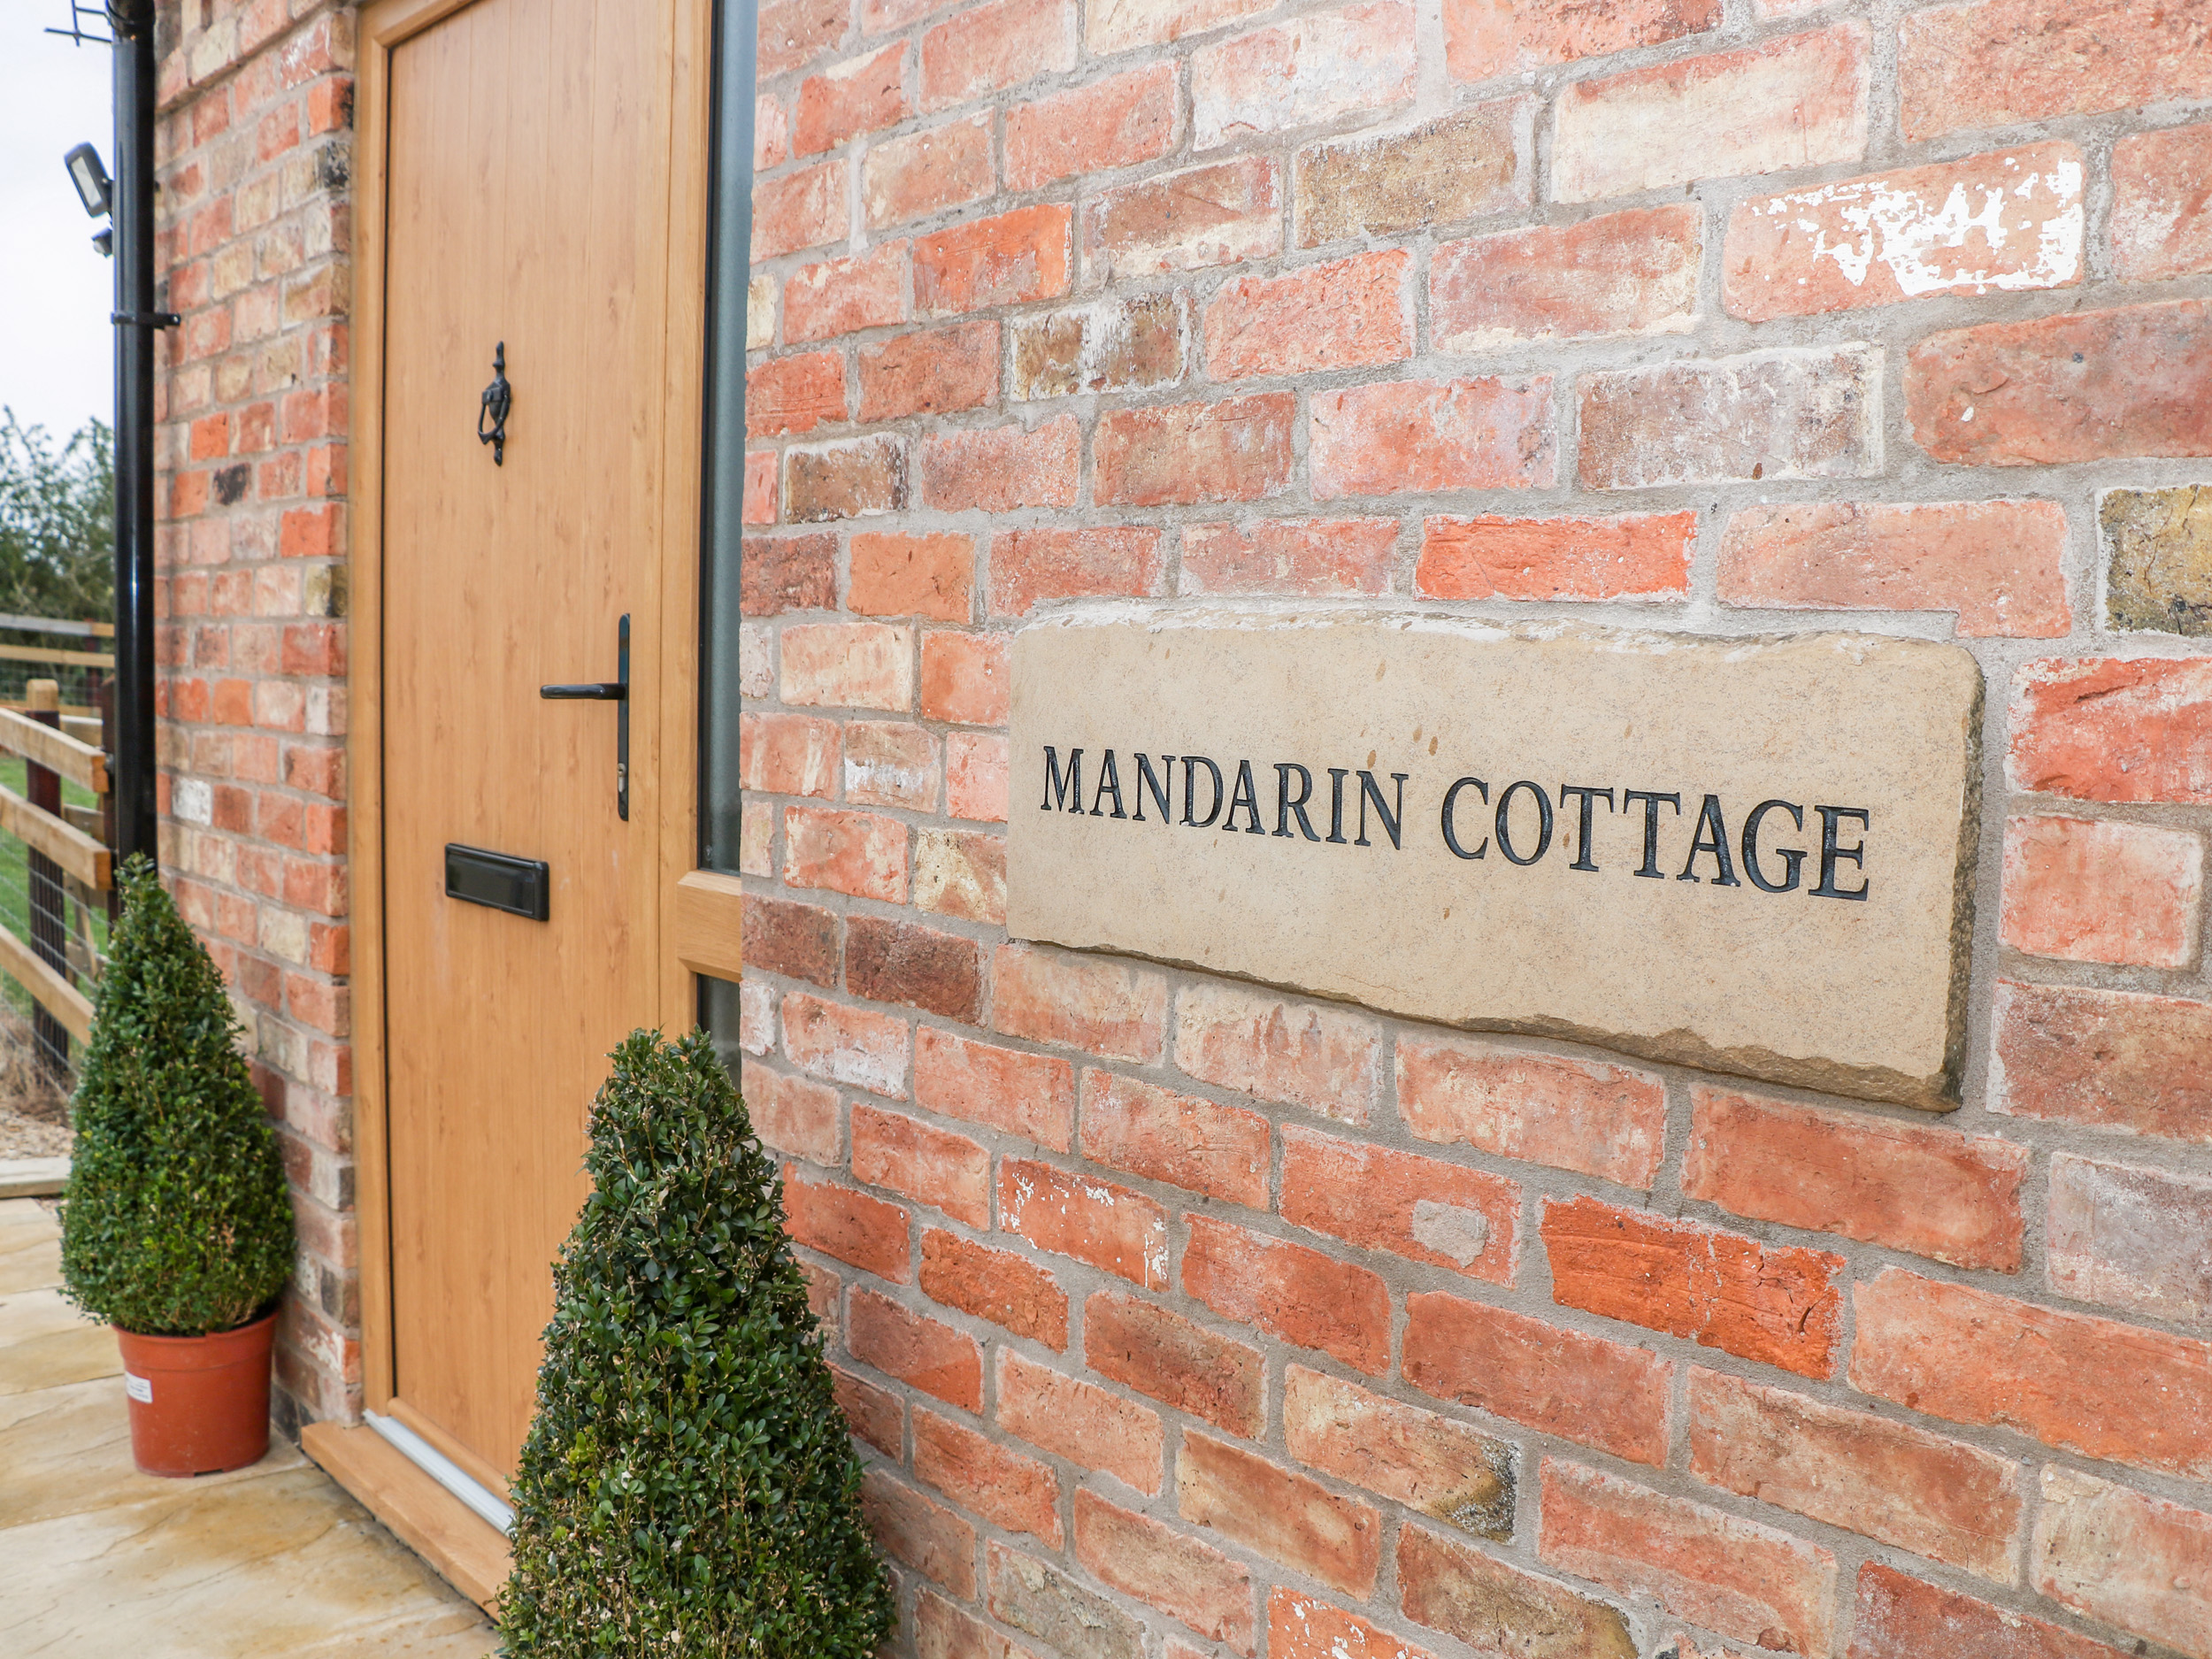 Mandarin Cottage, Melton Mowbray